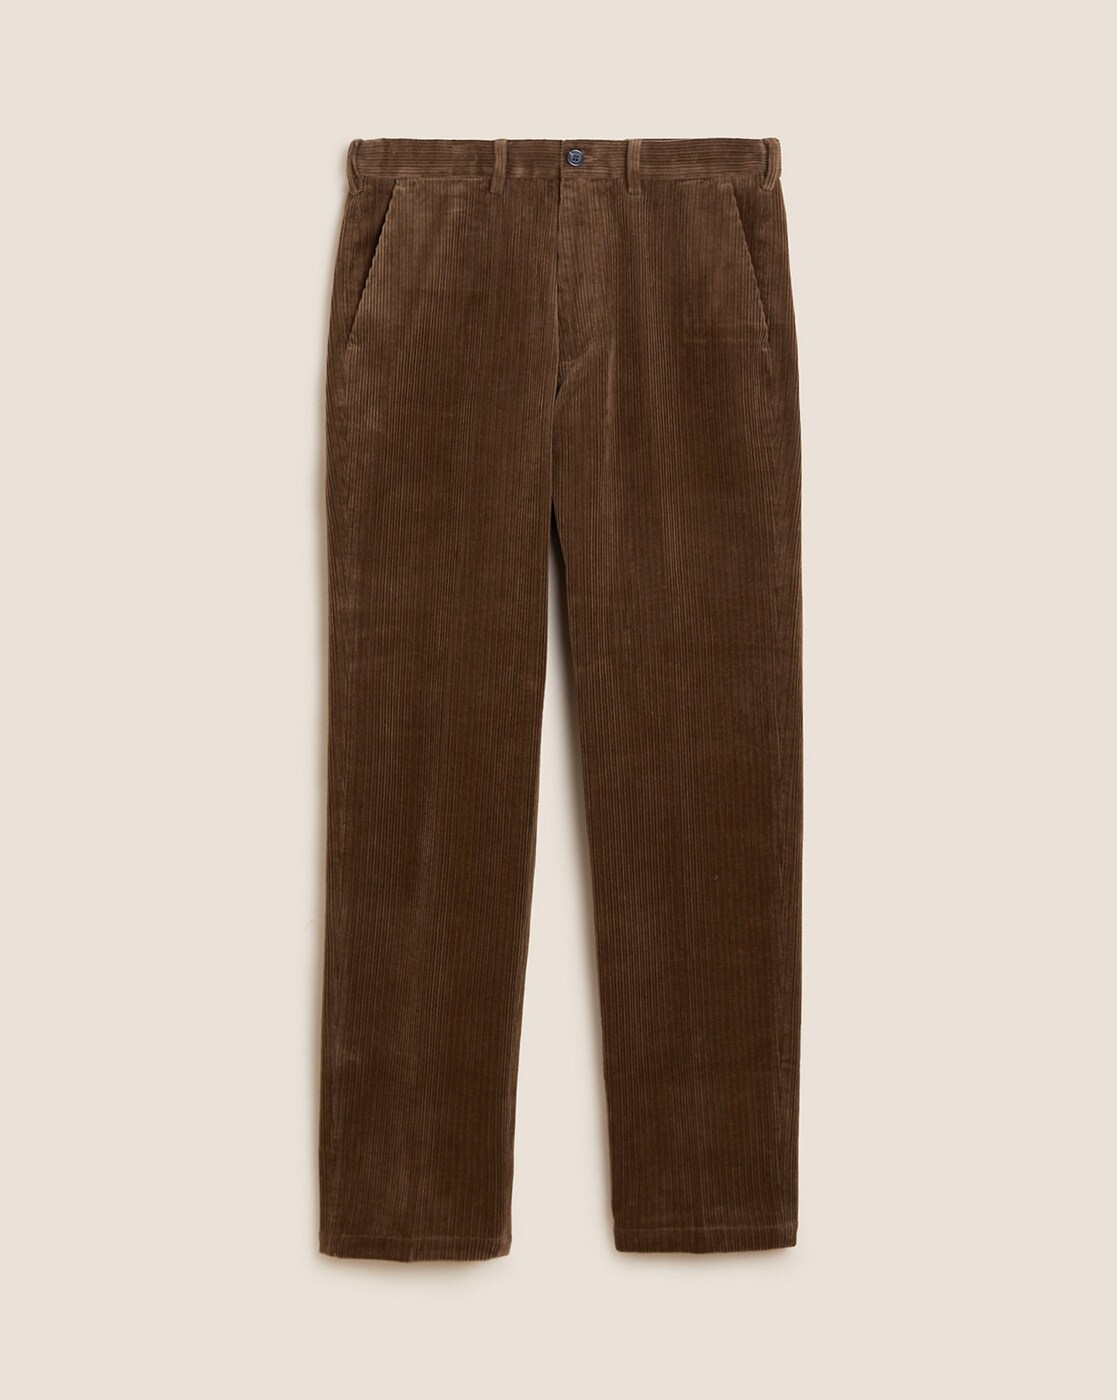 Buy Khaki Trousers & Pants for Men by PARX SMU Online | Ajio.com